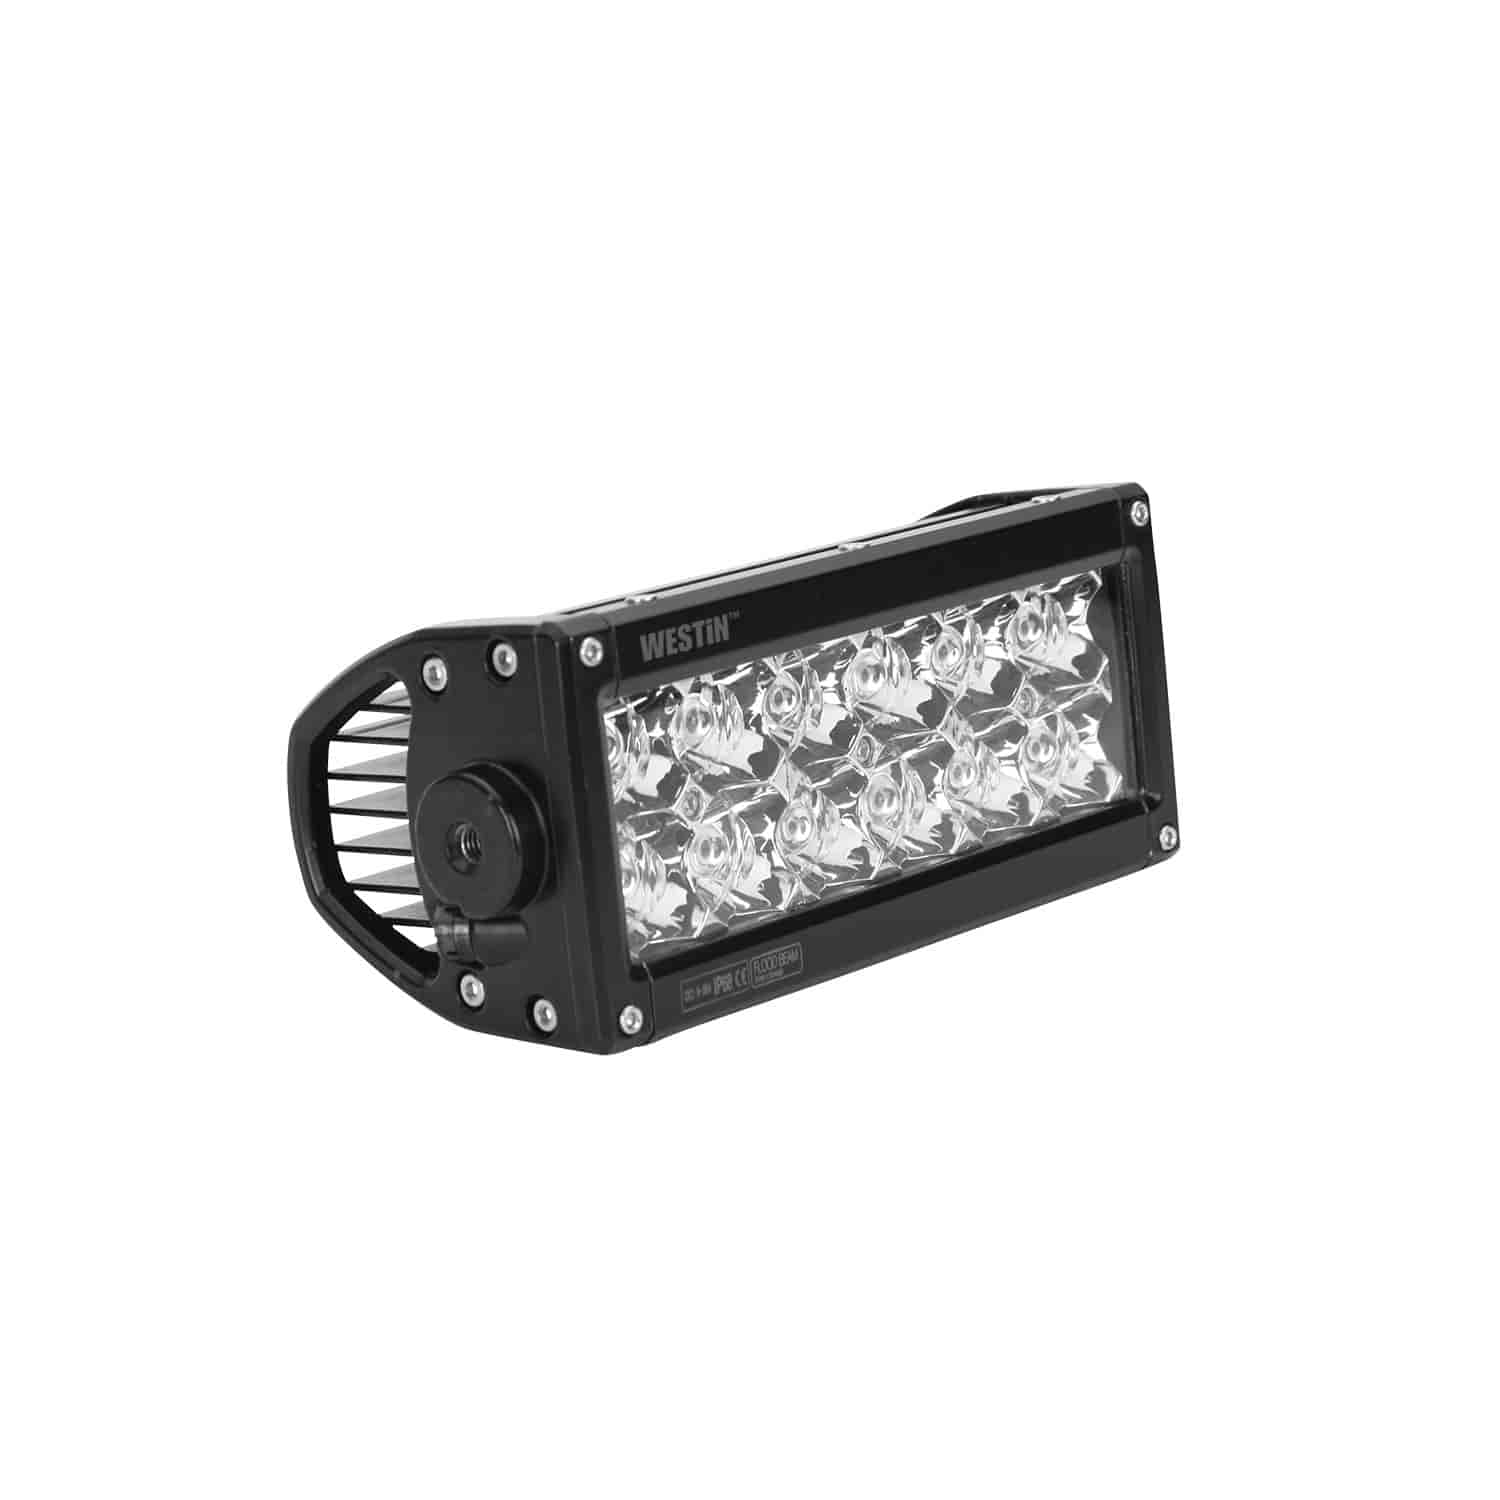 Low-Profile Double-Row LED Light Bar 6" Length